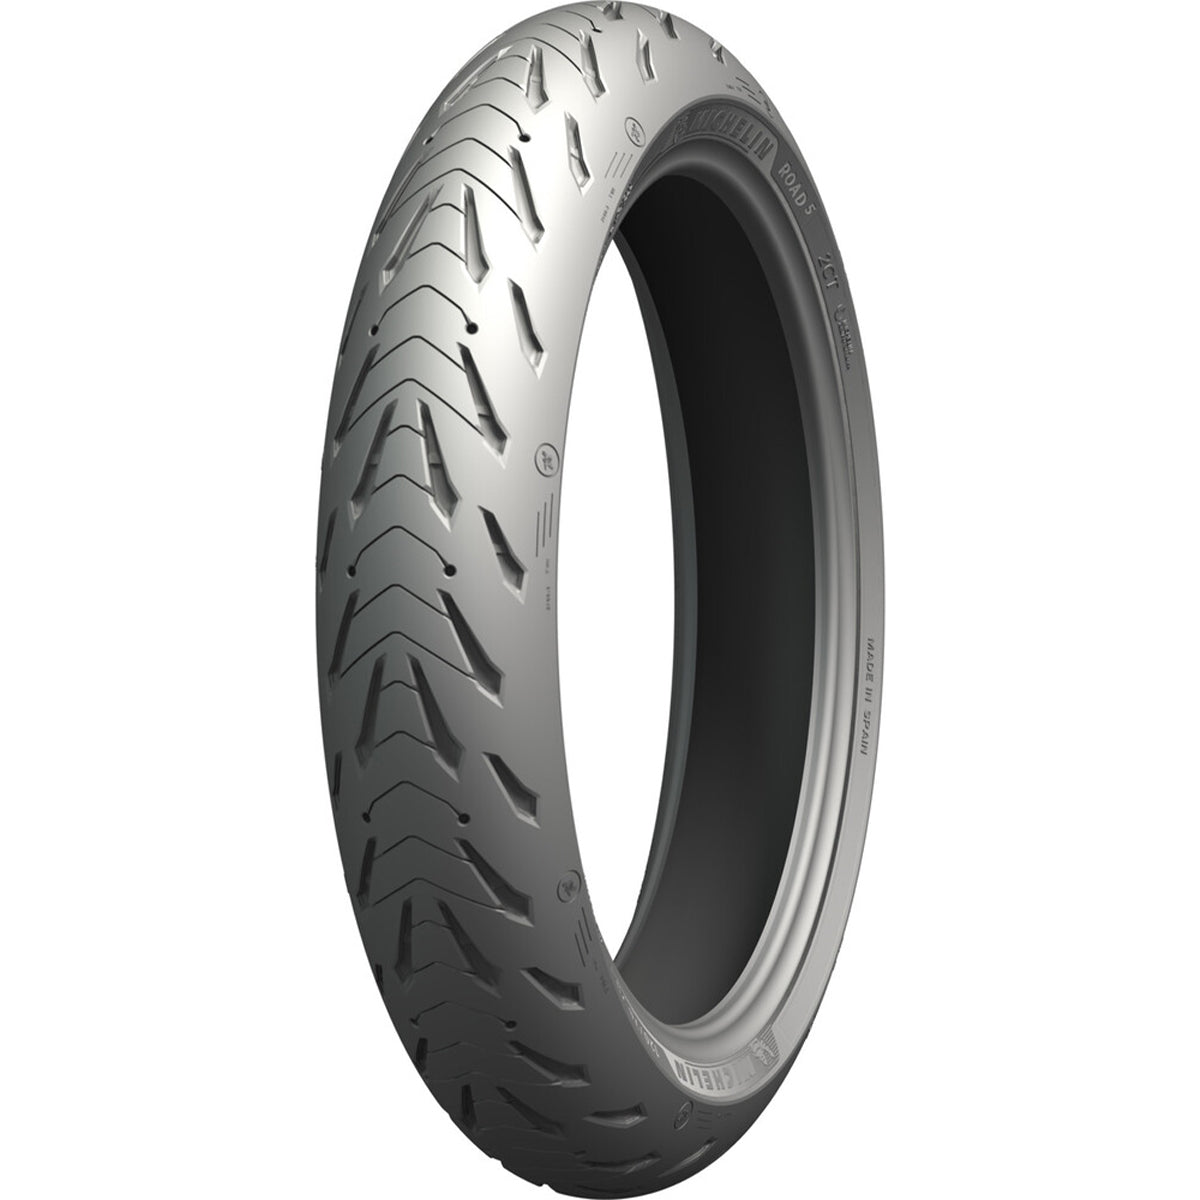 Michelin Enduro Medium 18" Rear Off-Road Tires-0317